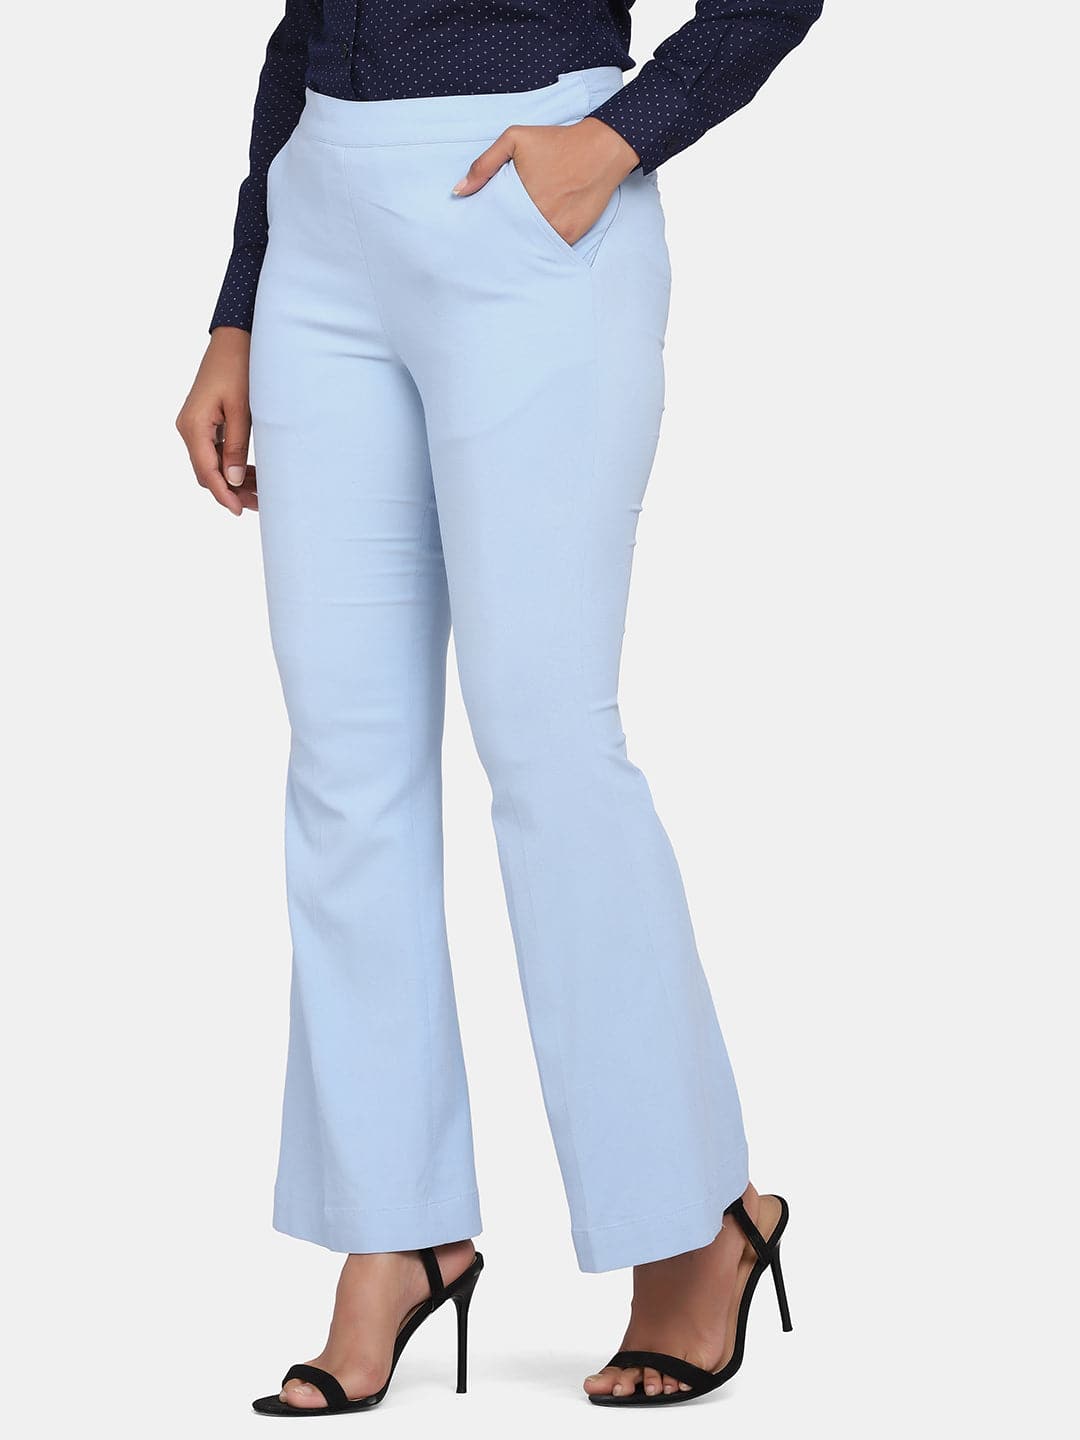 Buy FIRERO Women Holes Jeans Sgredded Bottom Denim Pencil Pants Ladies  Stretch High Waist Slim Light Blue Trousers (Large, Light Blue) at Amazon.in